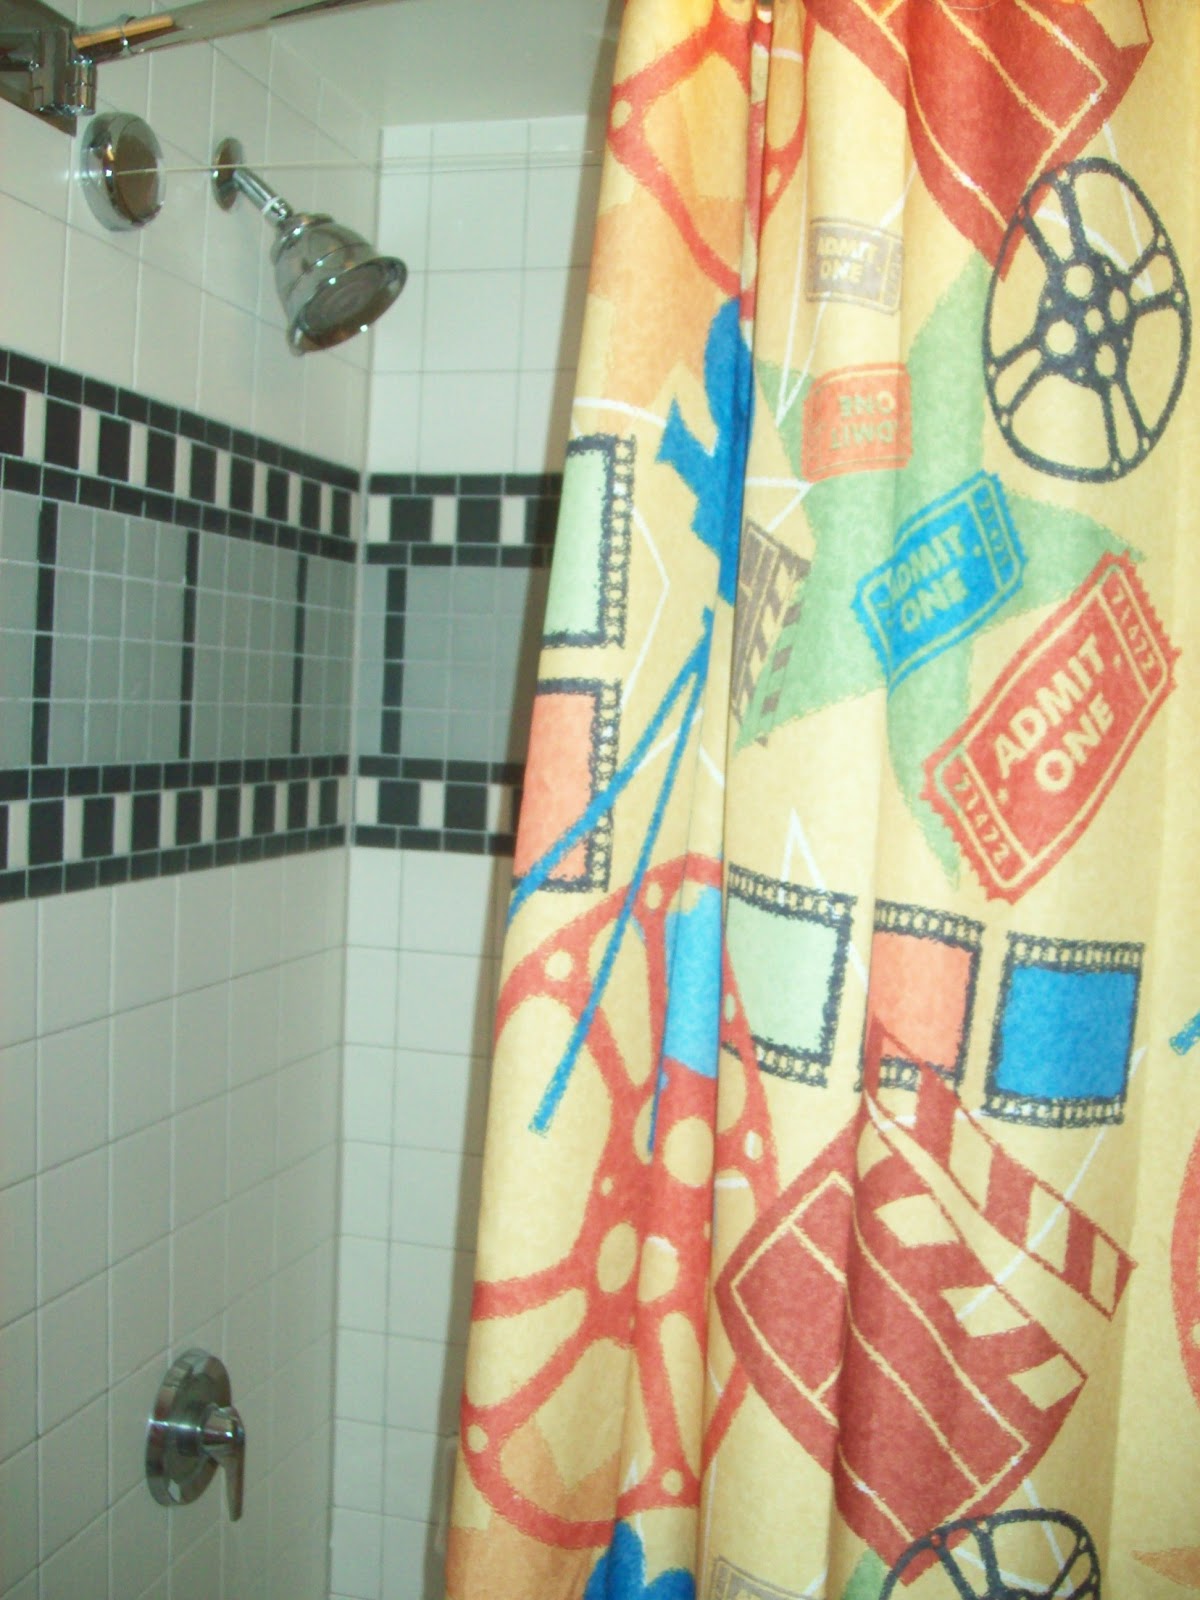 Inside The All Star Resort Room, Leoma Lovegrove Shower Curtain